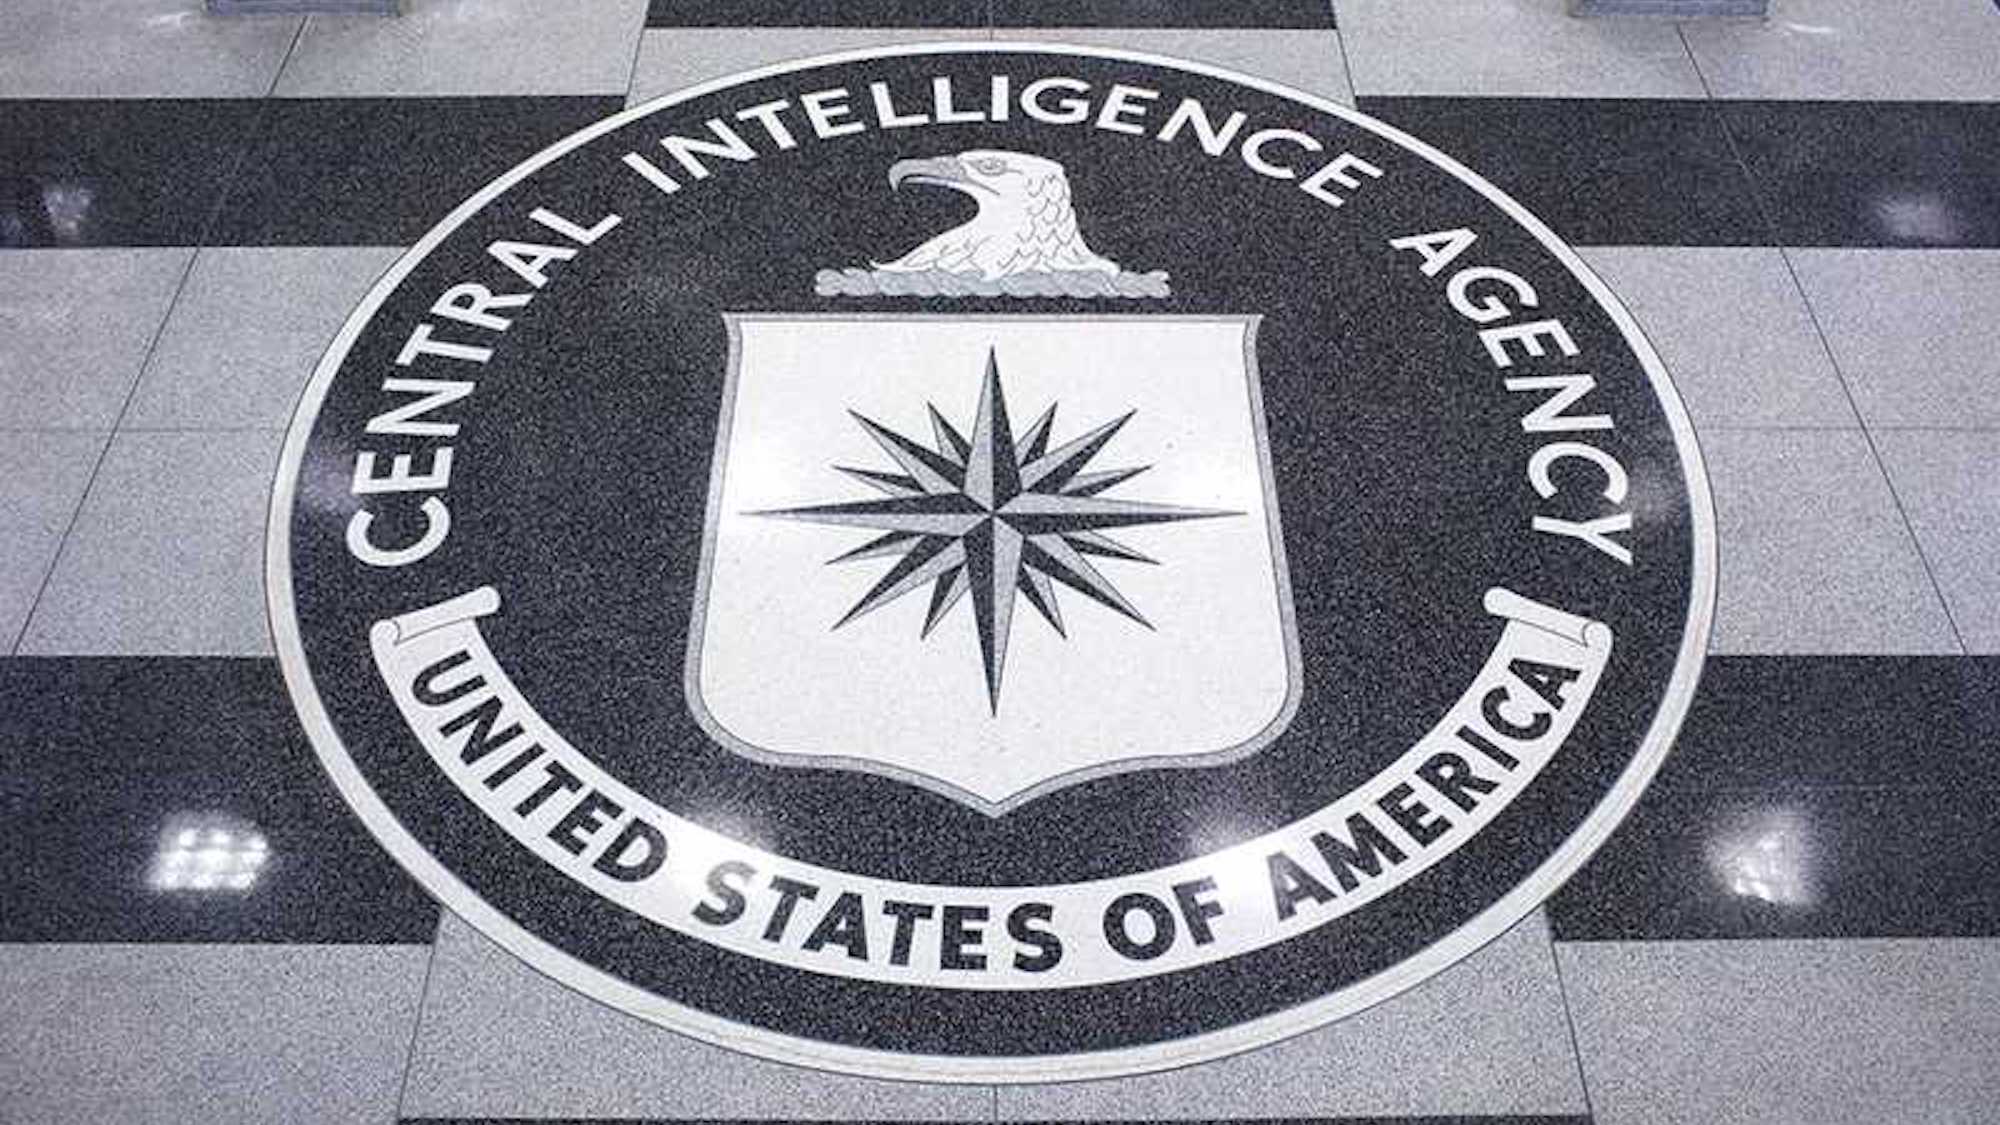 CIA headquarters floor seal logo